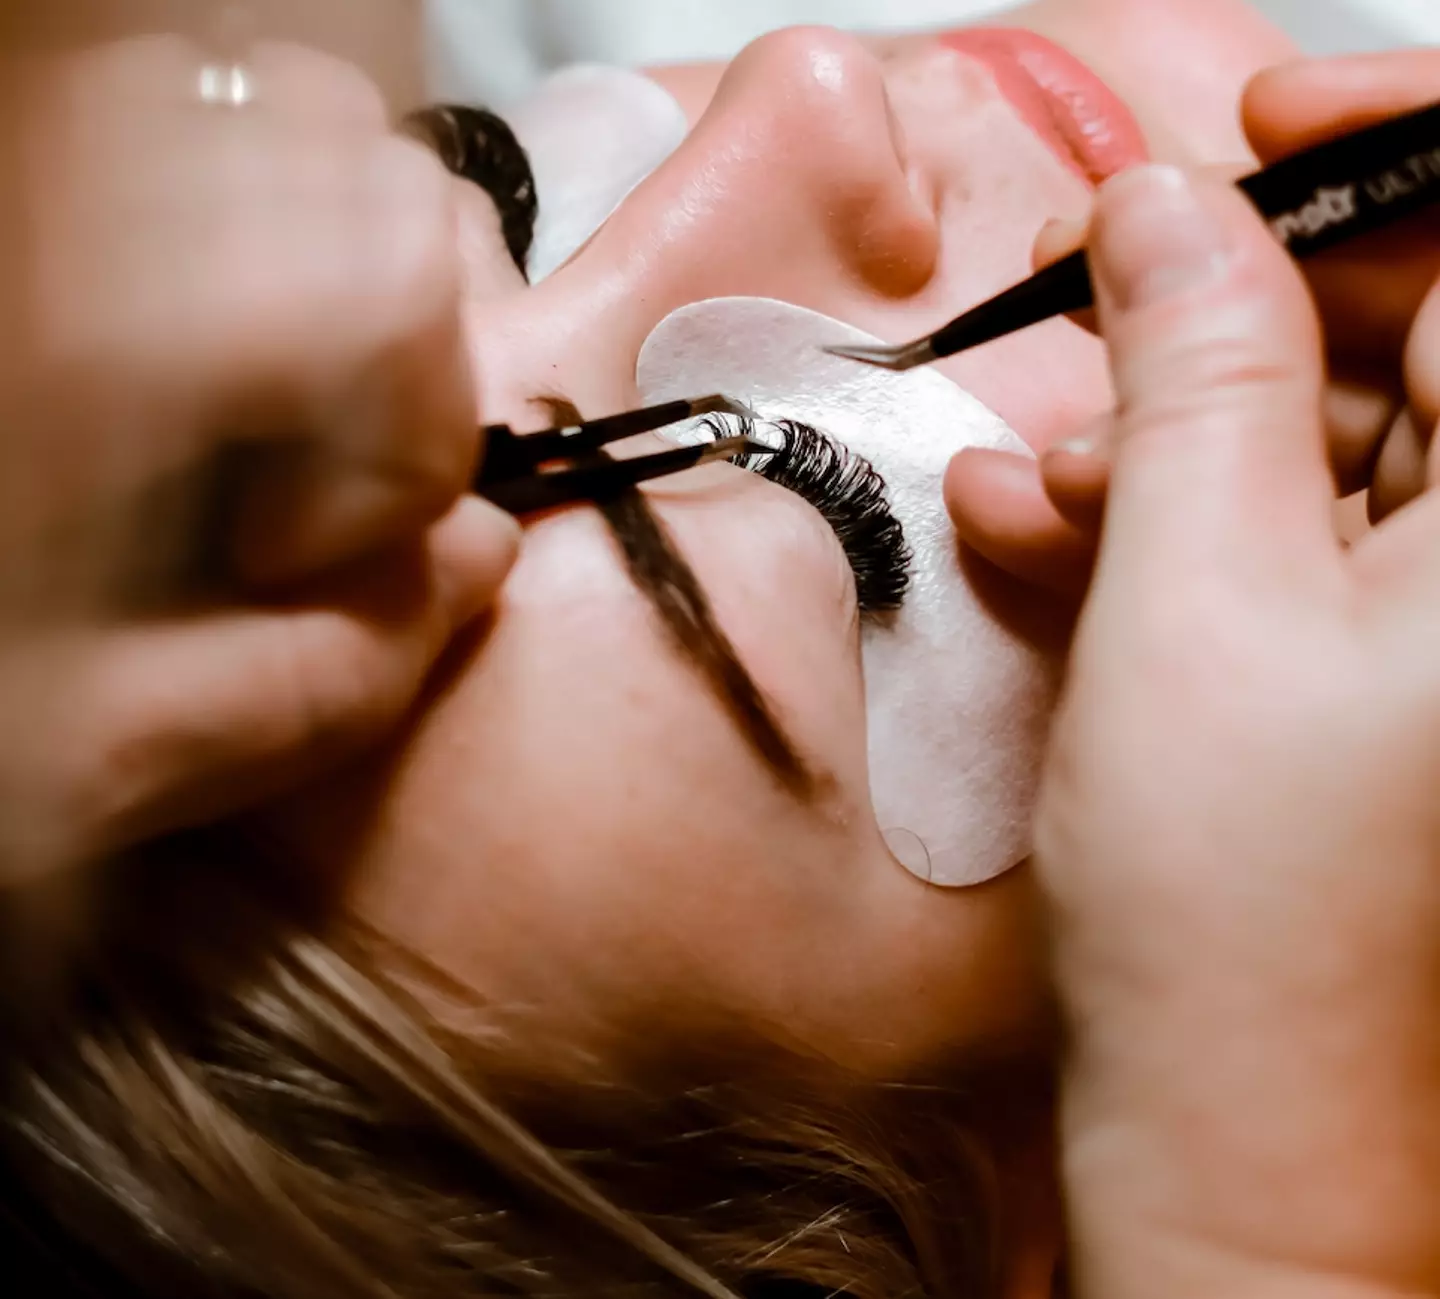 Experts said people should visit eyelash professionals for treatments (